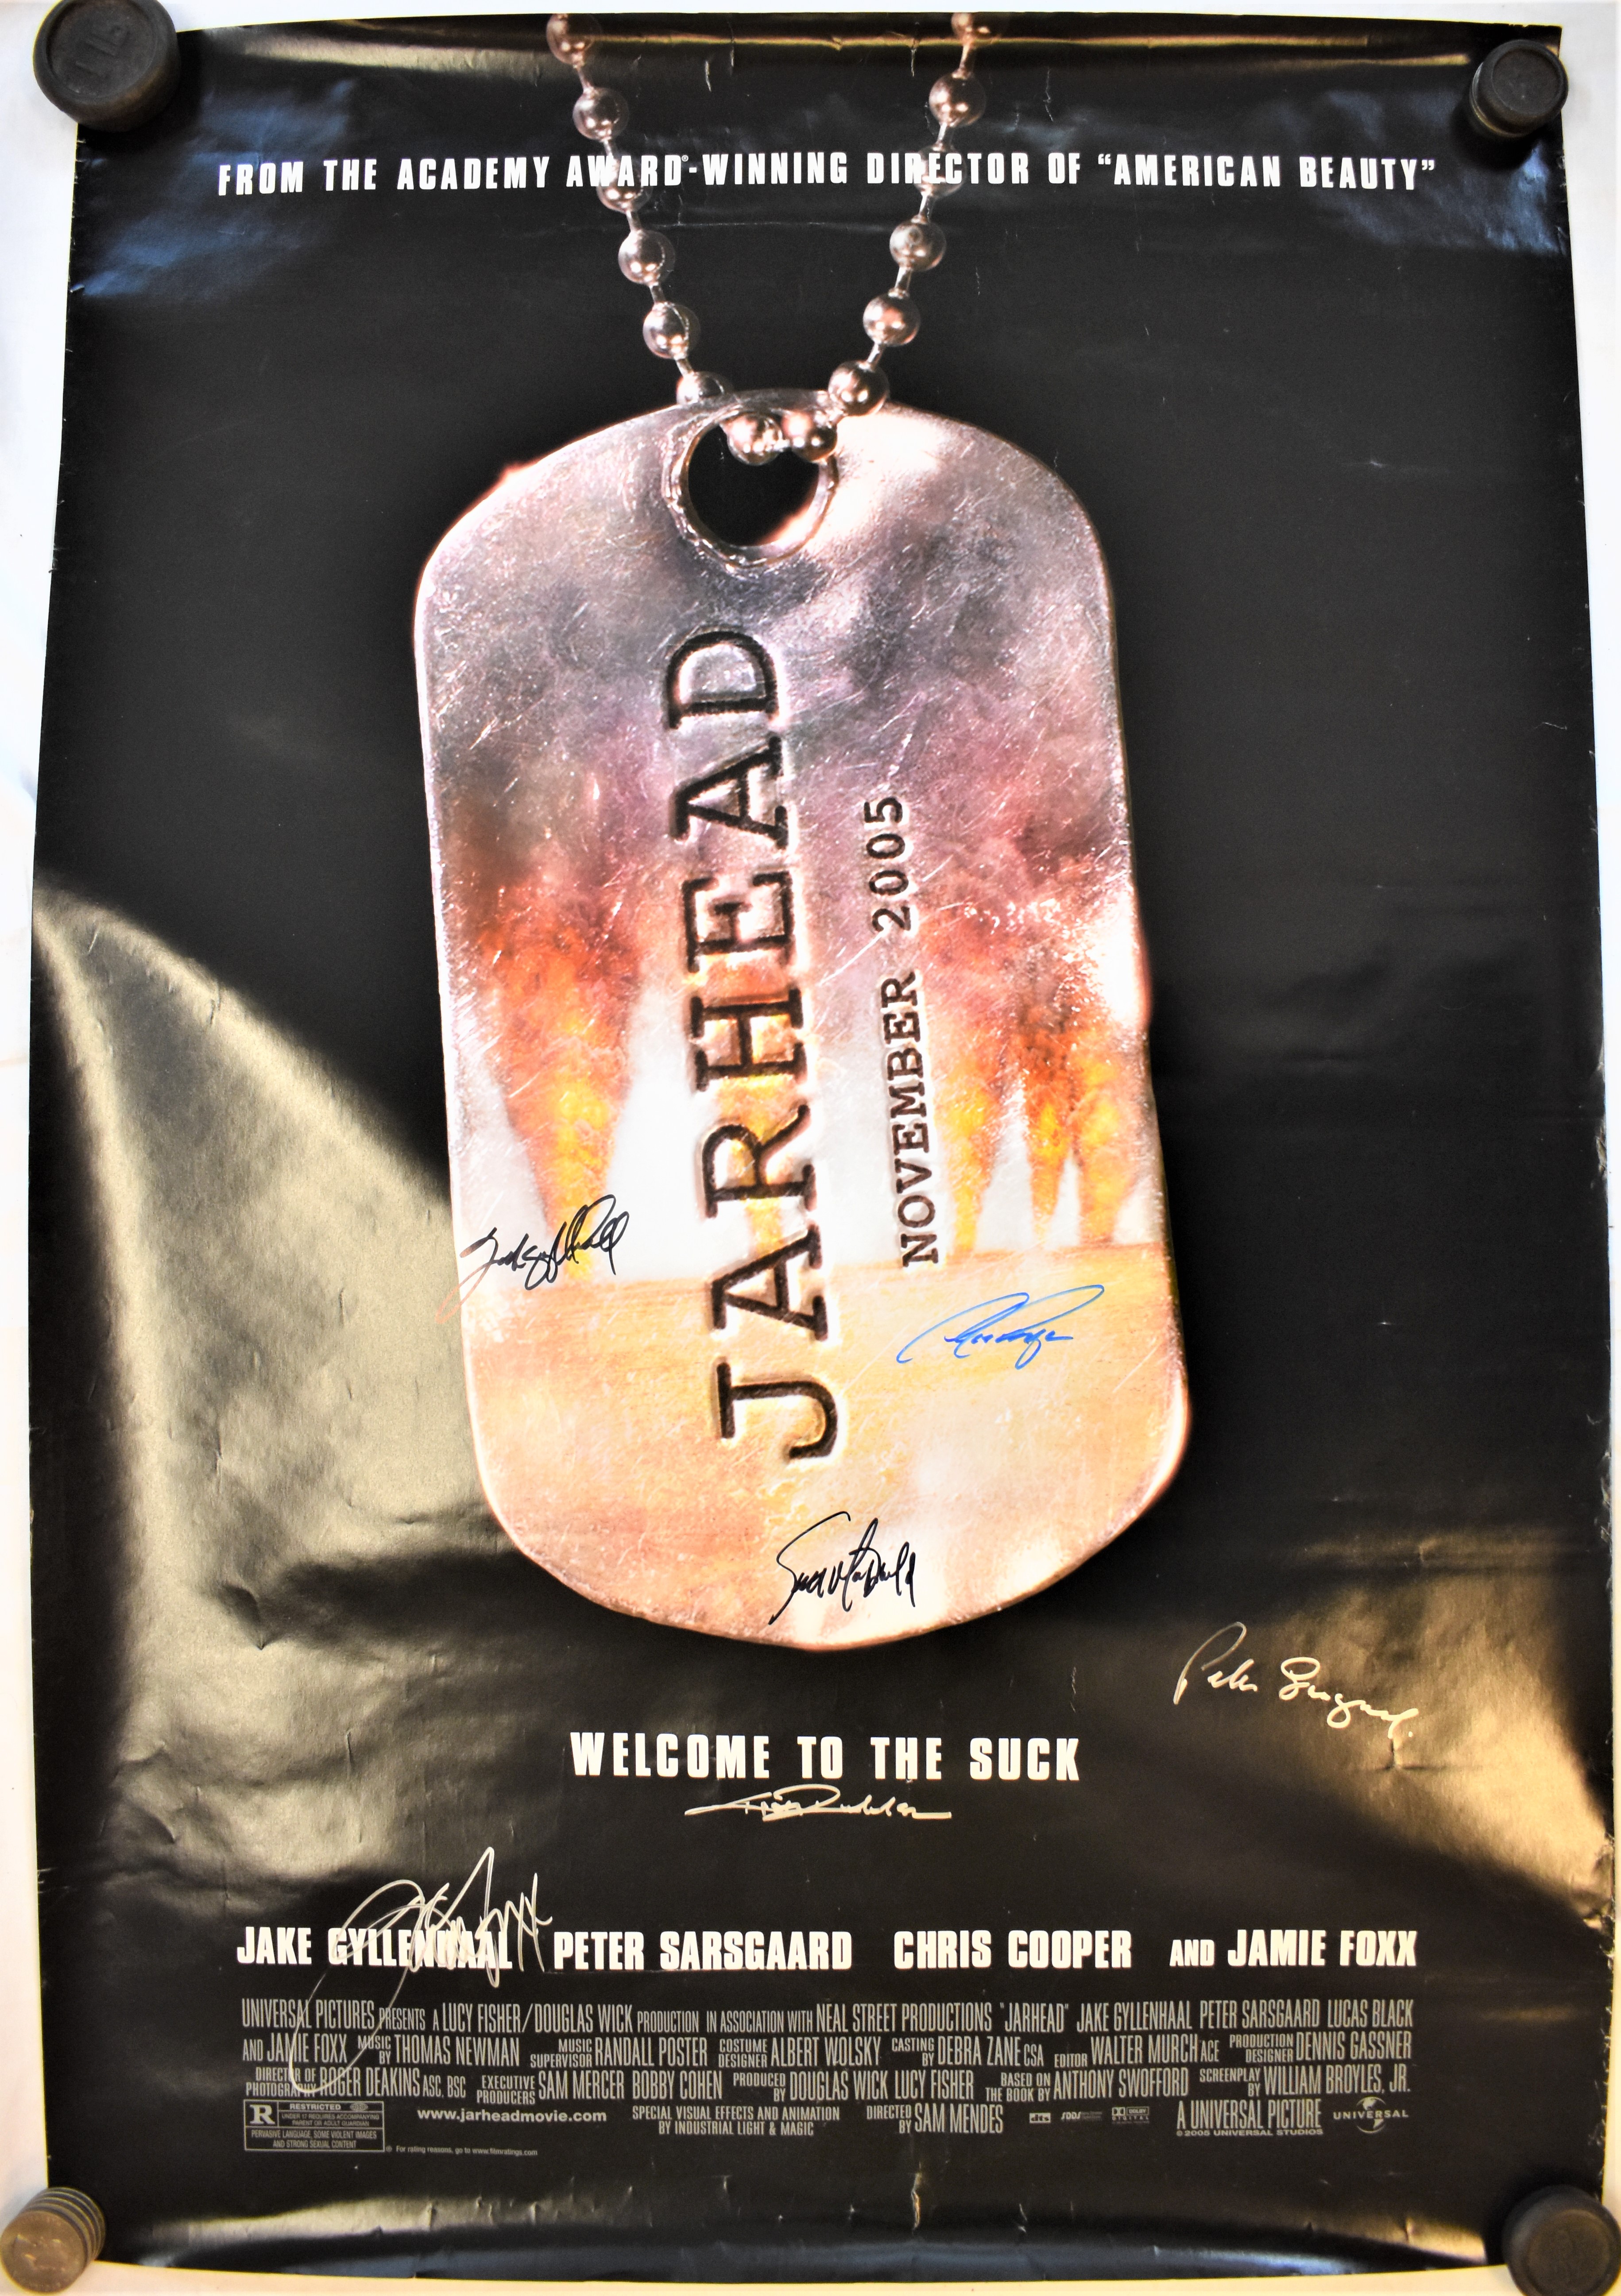 Film Poster-'Jarhead Nov.2005'-signed by Jamie Foxx and Peter Sarsgarrd-plus (3|) more signatures-